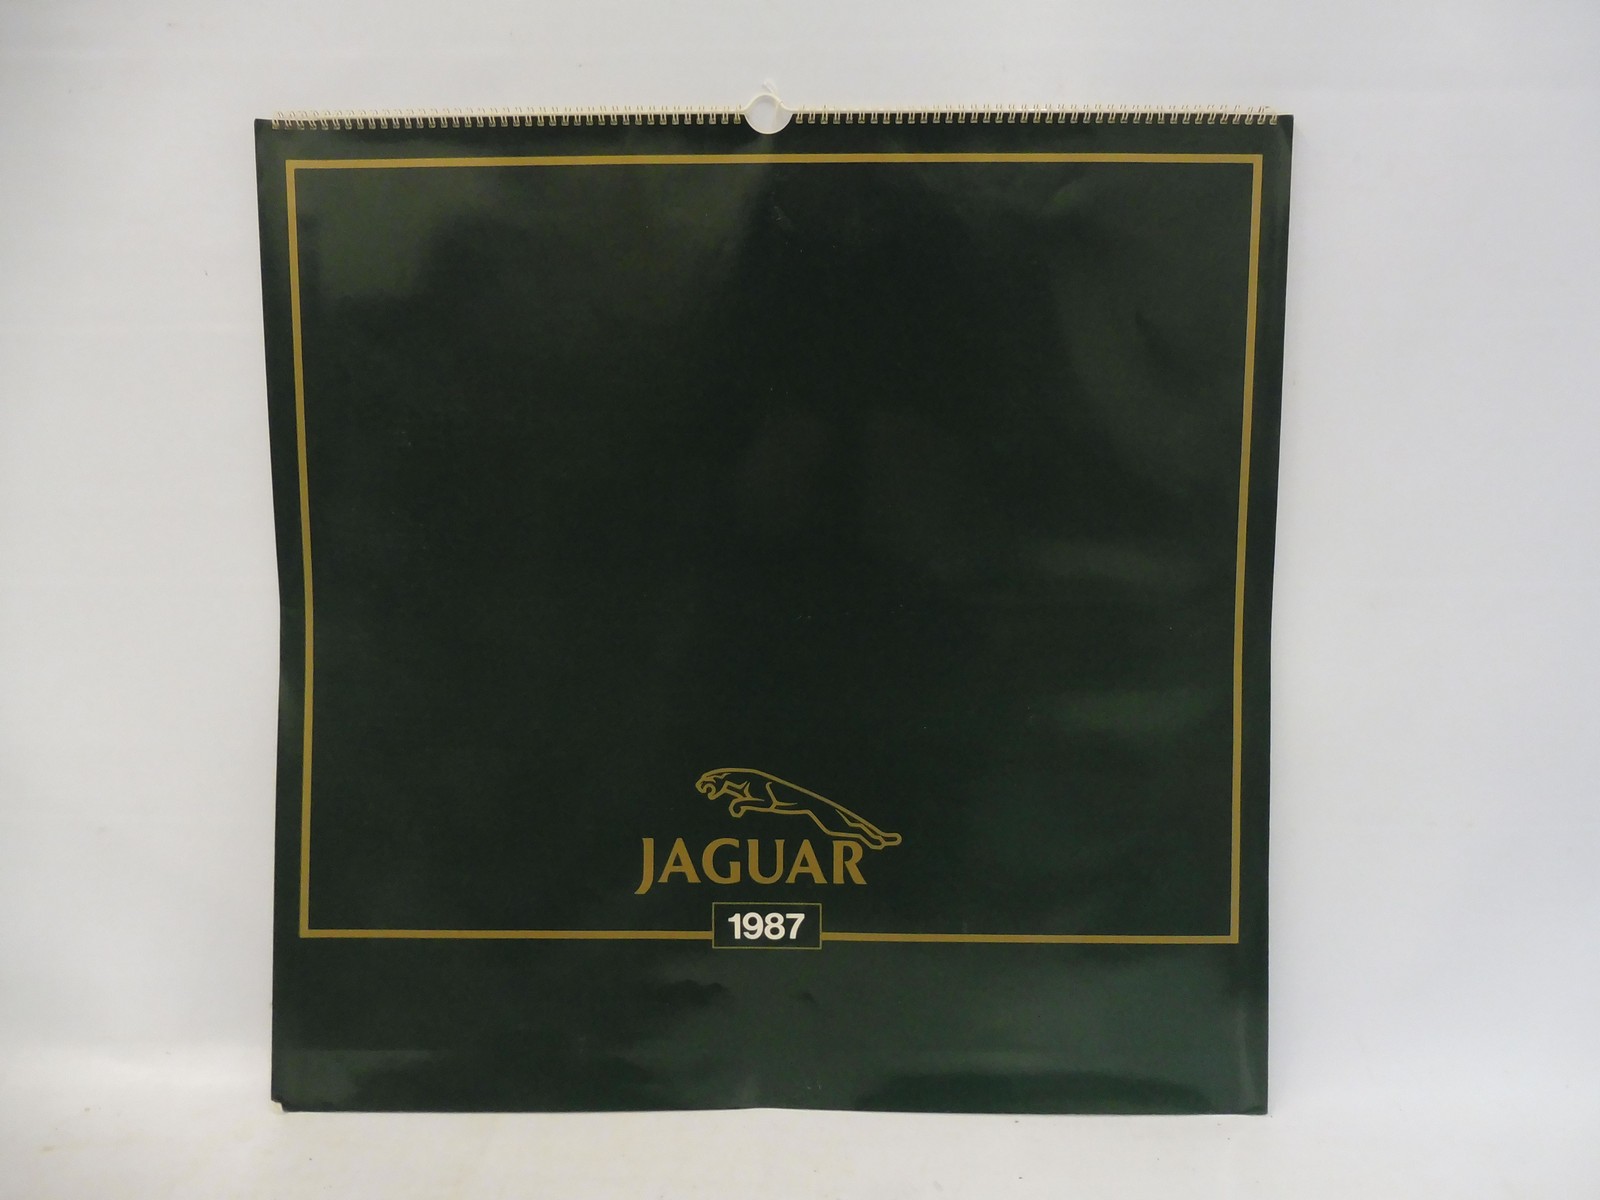 A 1987 Jaguar calendar. - Image 4 of 4